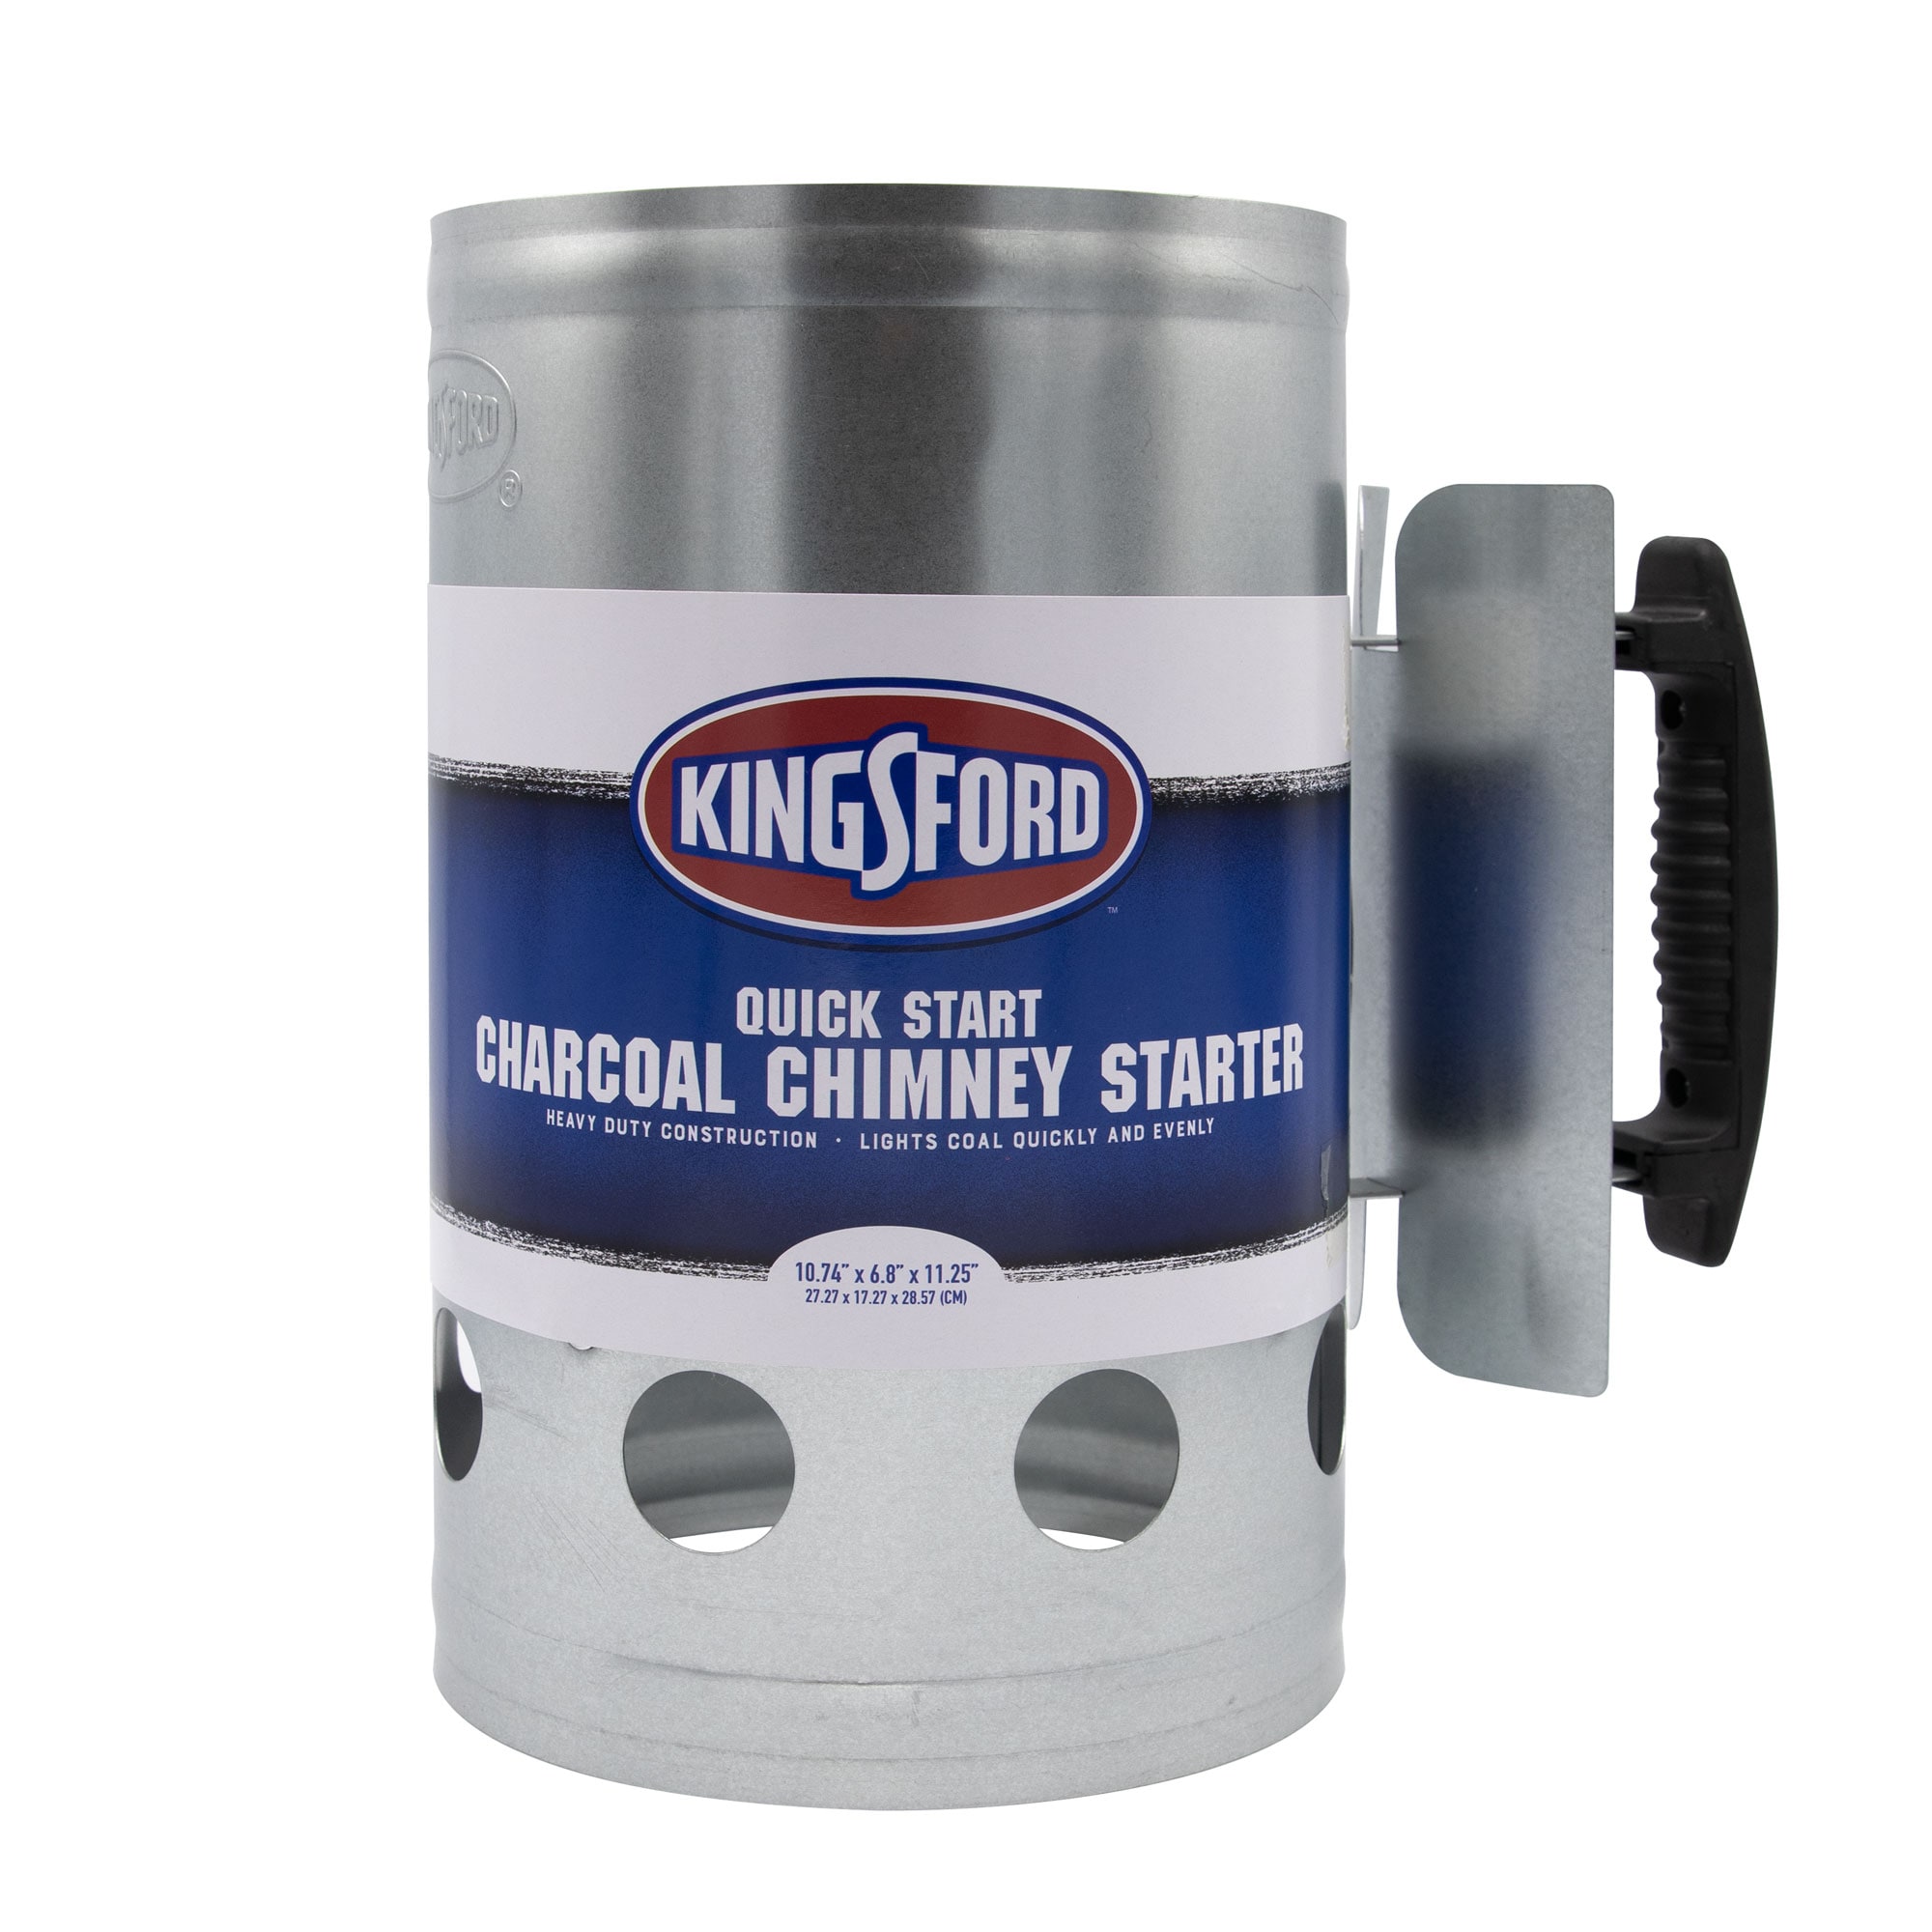 Stainless Steel Chimney Charcoal Starter Lighting Kit Barbeque BBQ Grill Lighter 